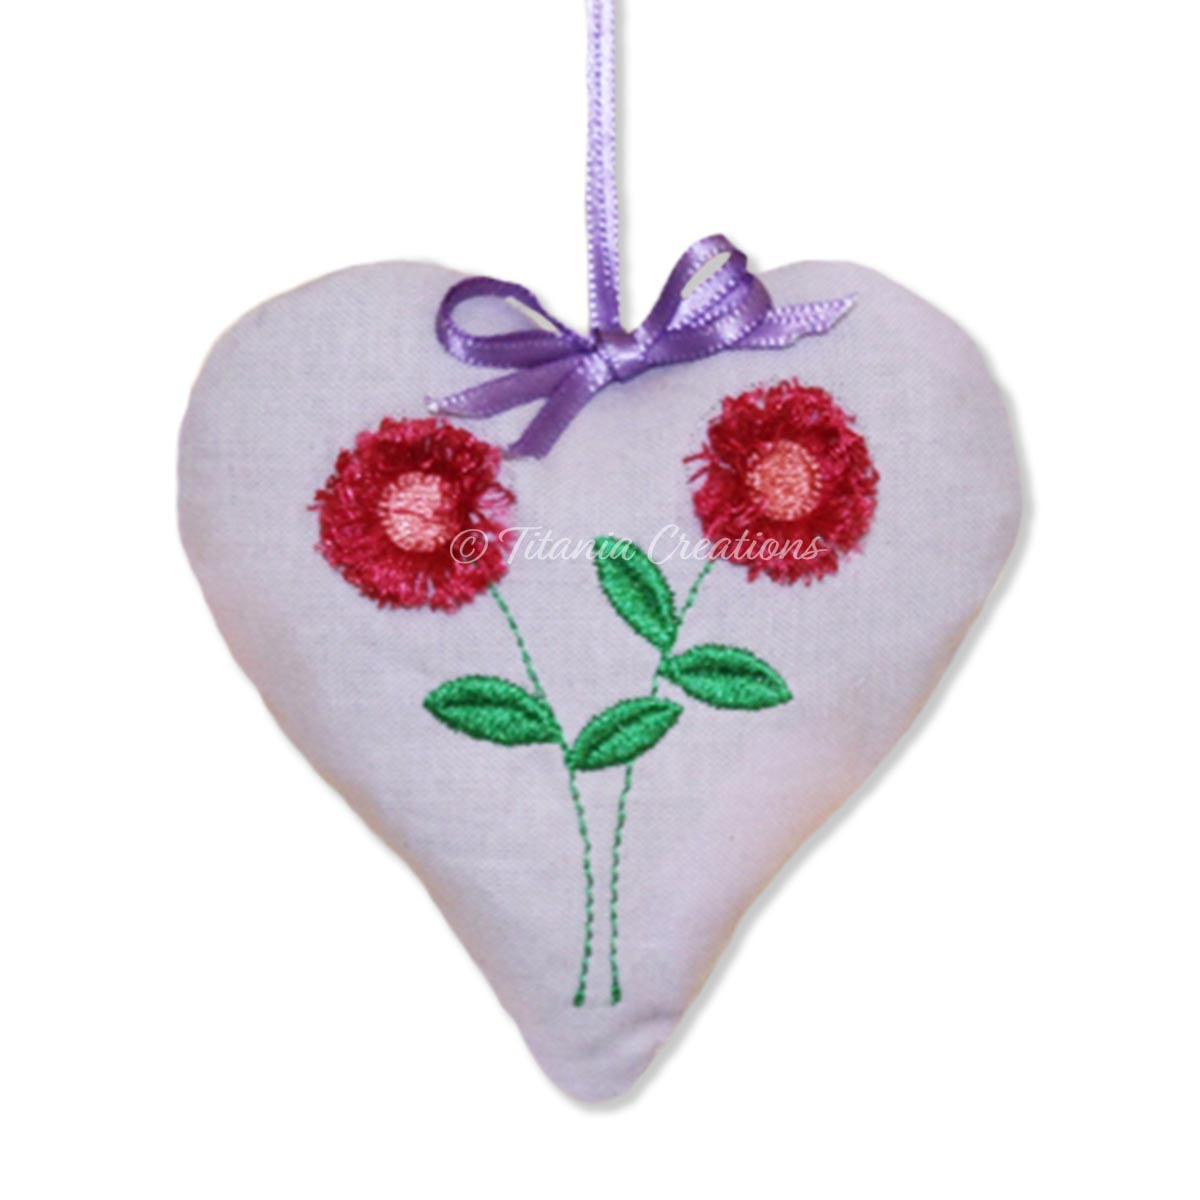 Fringe Heart Embroidery Design - Lagniappe Peddler